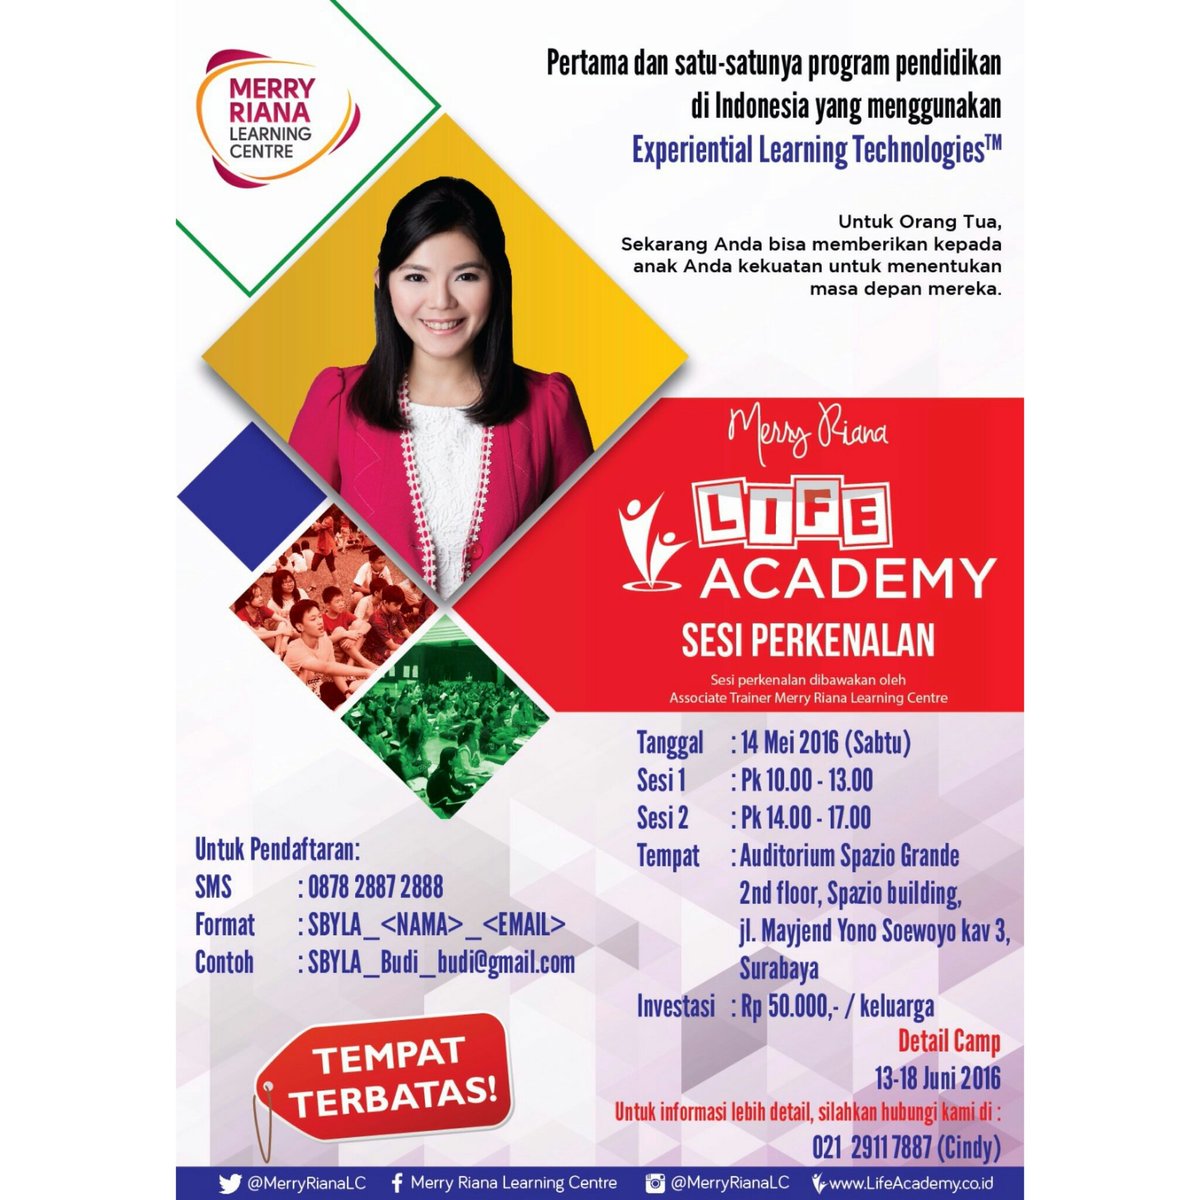 Merry Riana On Twitter Surabaya Hadiri Sesi Perkenalan Life Academy Daftar La_nama_email Sms Ke 0878 2887 2888 Httpstcob8zz8vgwjz Twitter